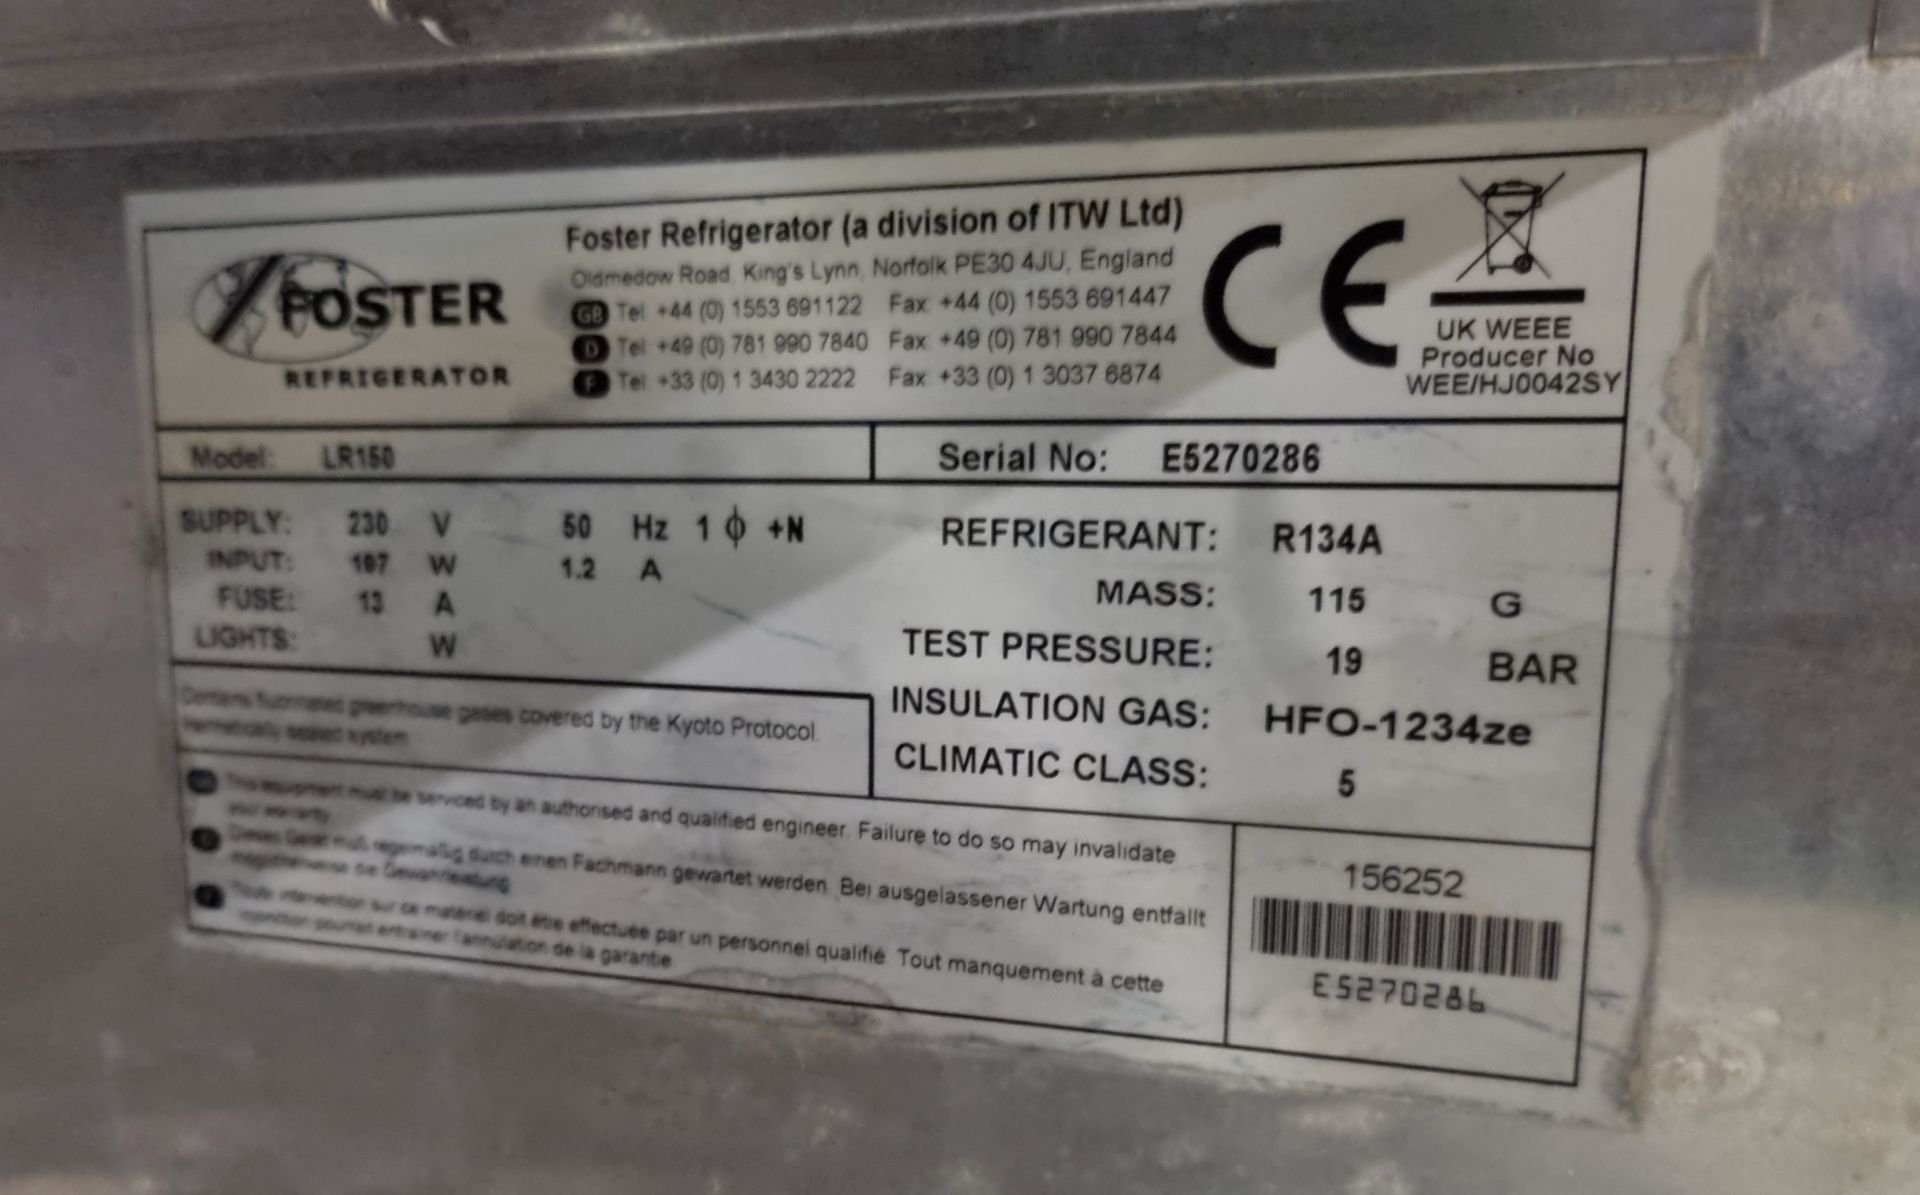 Foster LR150 stainless steel single door under counter freezer - W 605 x D 615 x H 830mm - Image 4 of 4